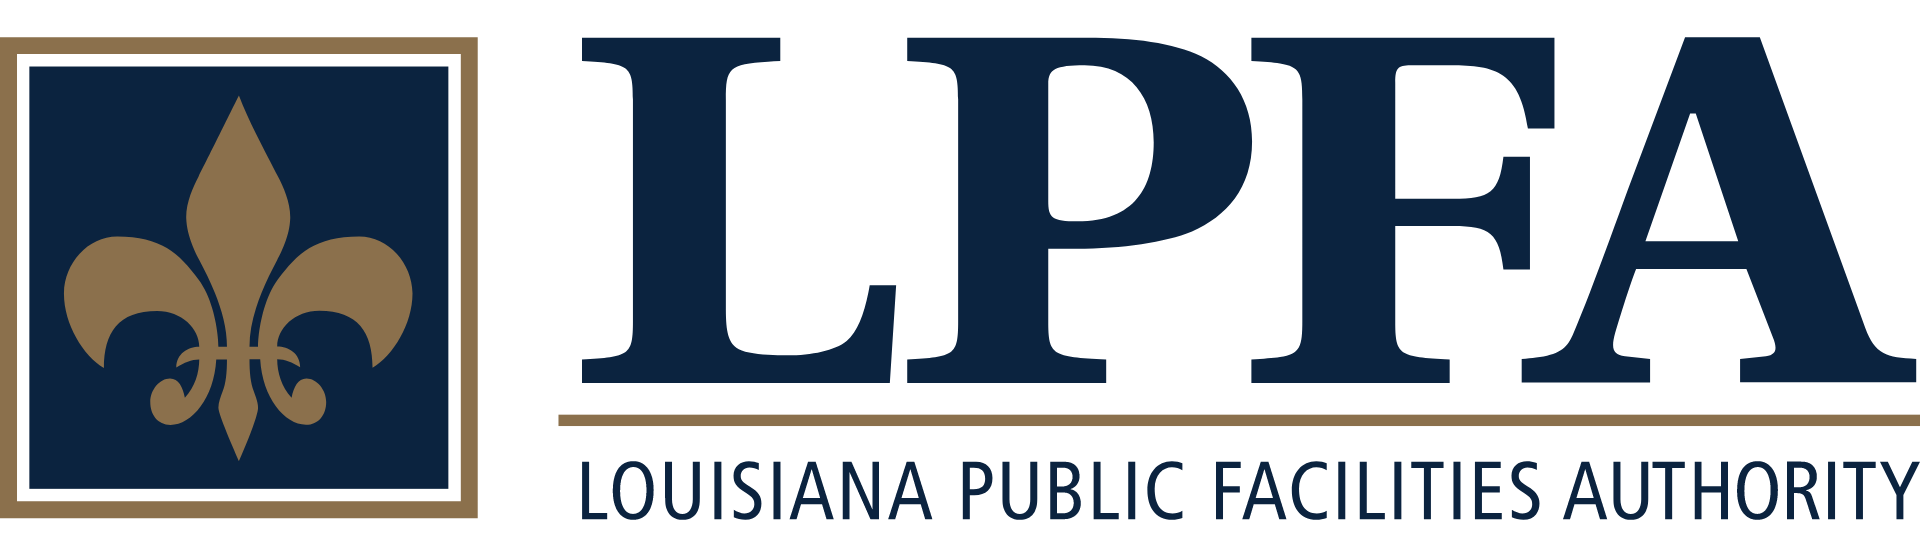 LPFA logo